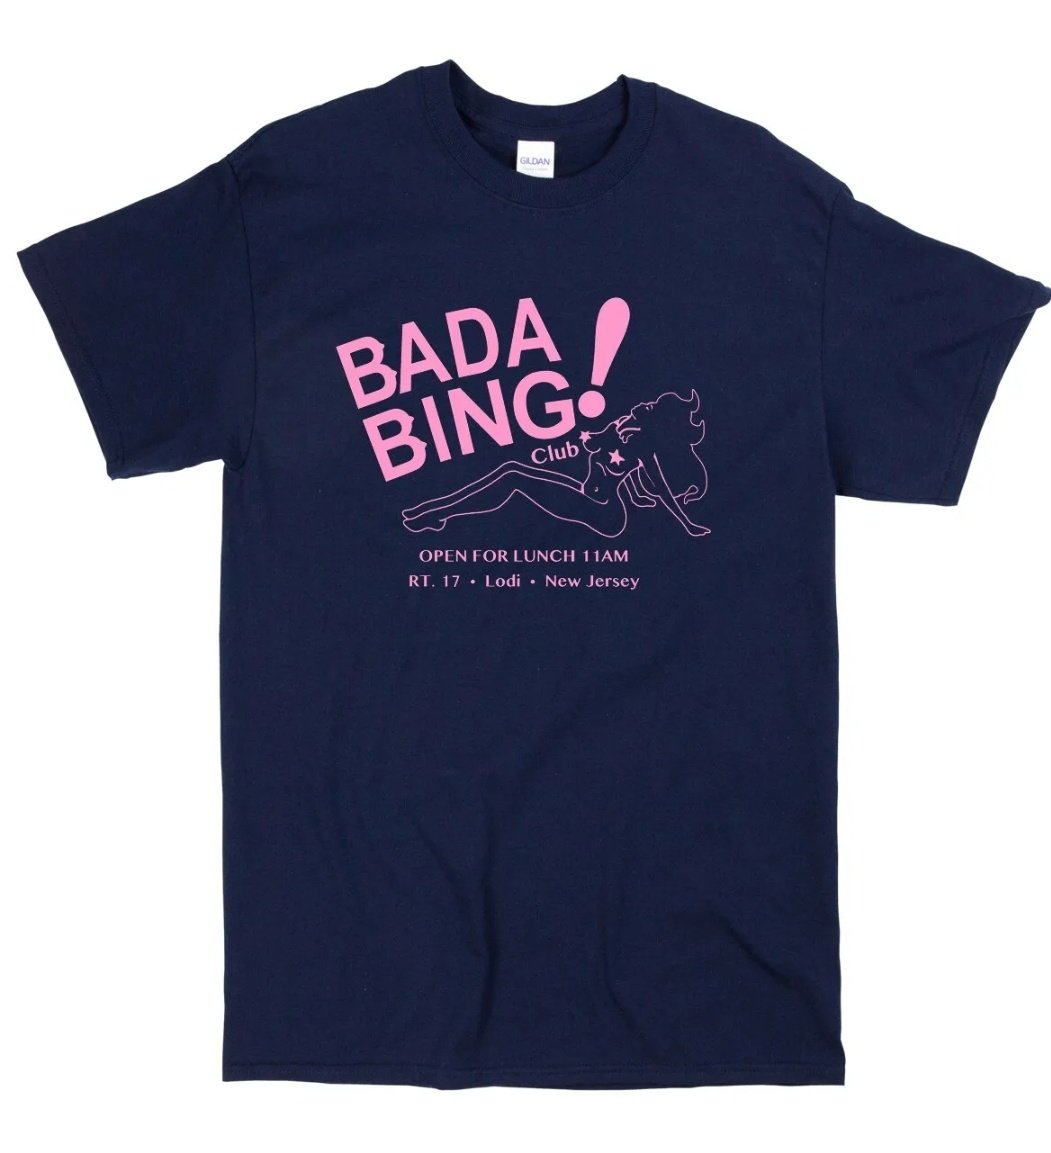 Bada Bing T Shirt - Inspired by The Sopranos | 4eveRetro